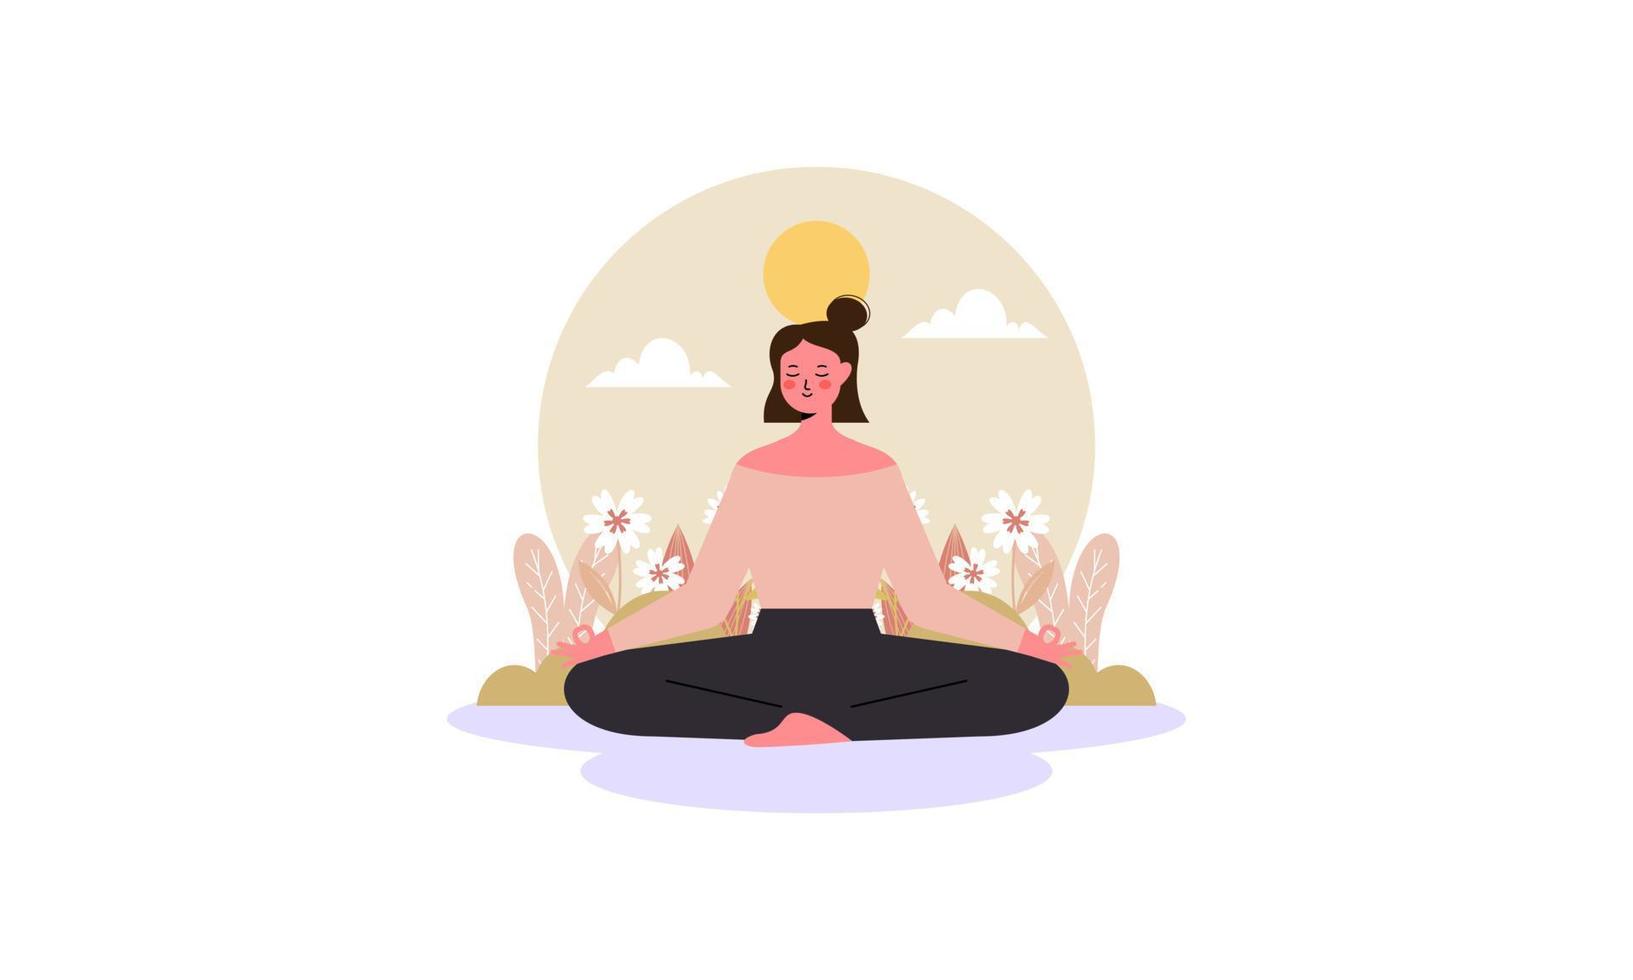 Frauen meditieren im Yoga Lotus Haltung im Natur Konzept Illustration vektor